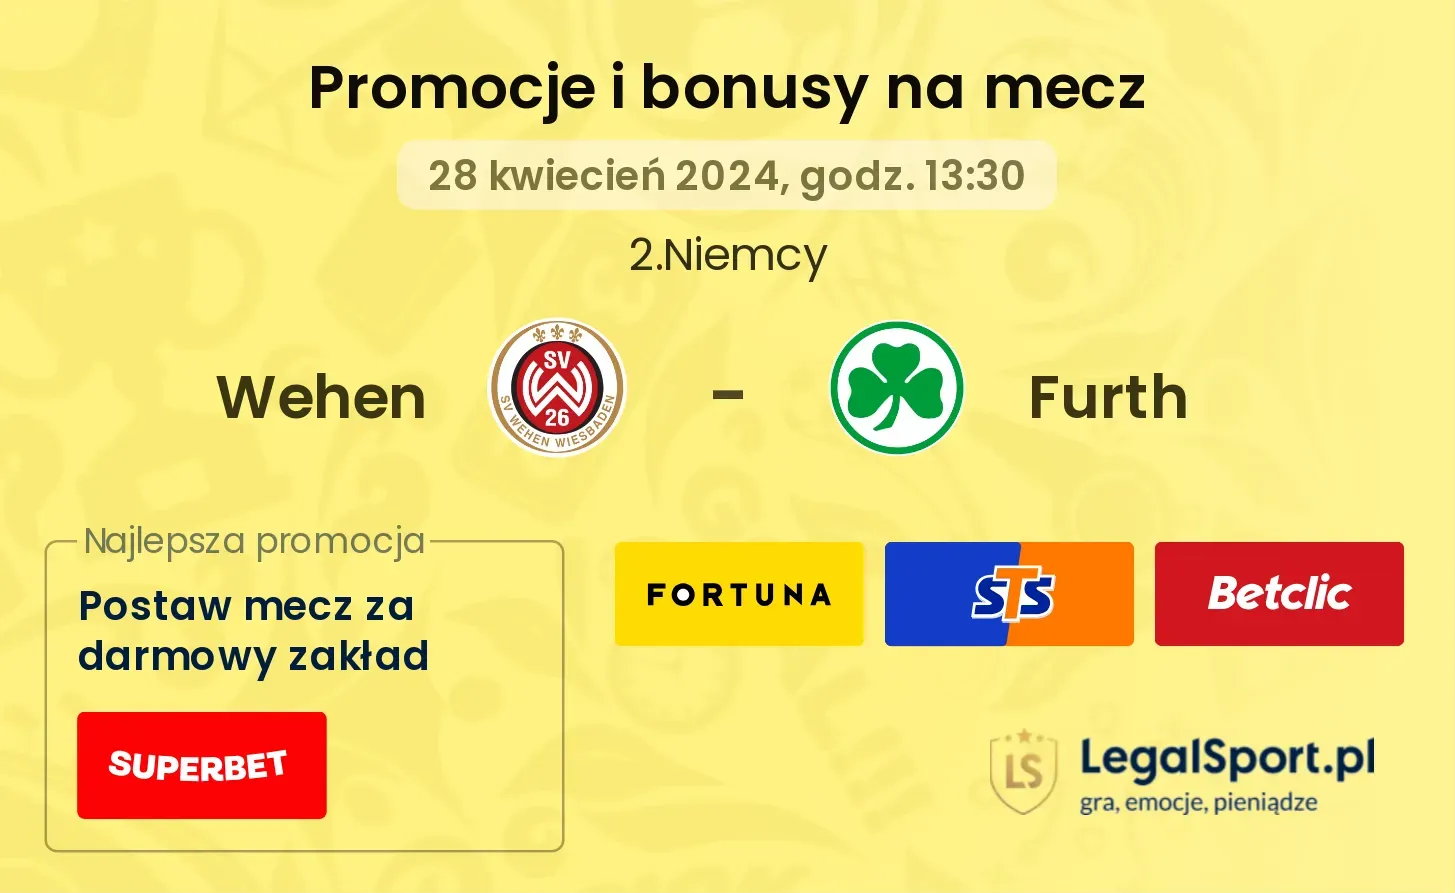 Wehen - Furth promocje bonusy na mecz